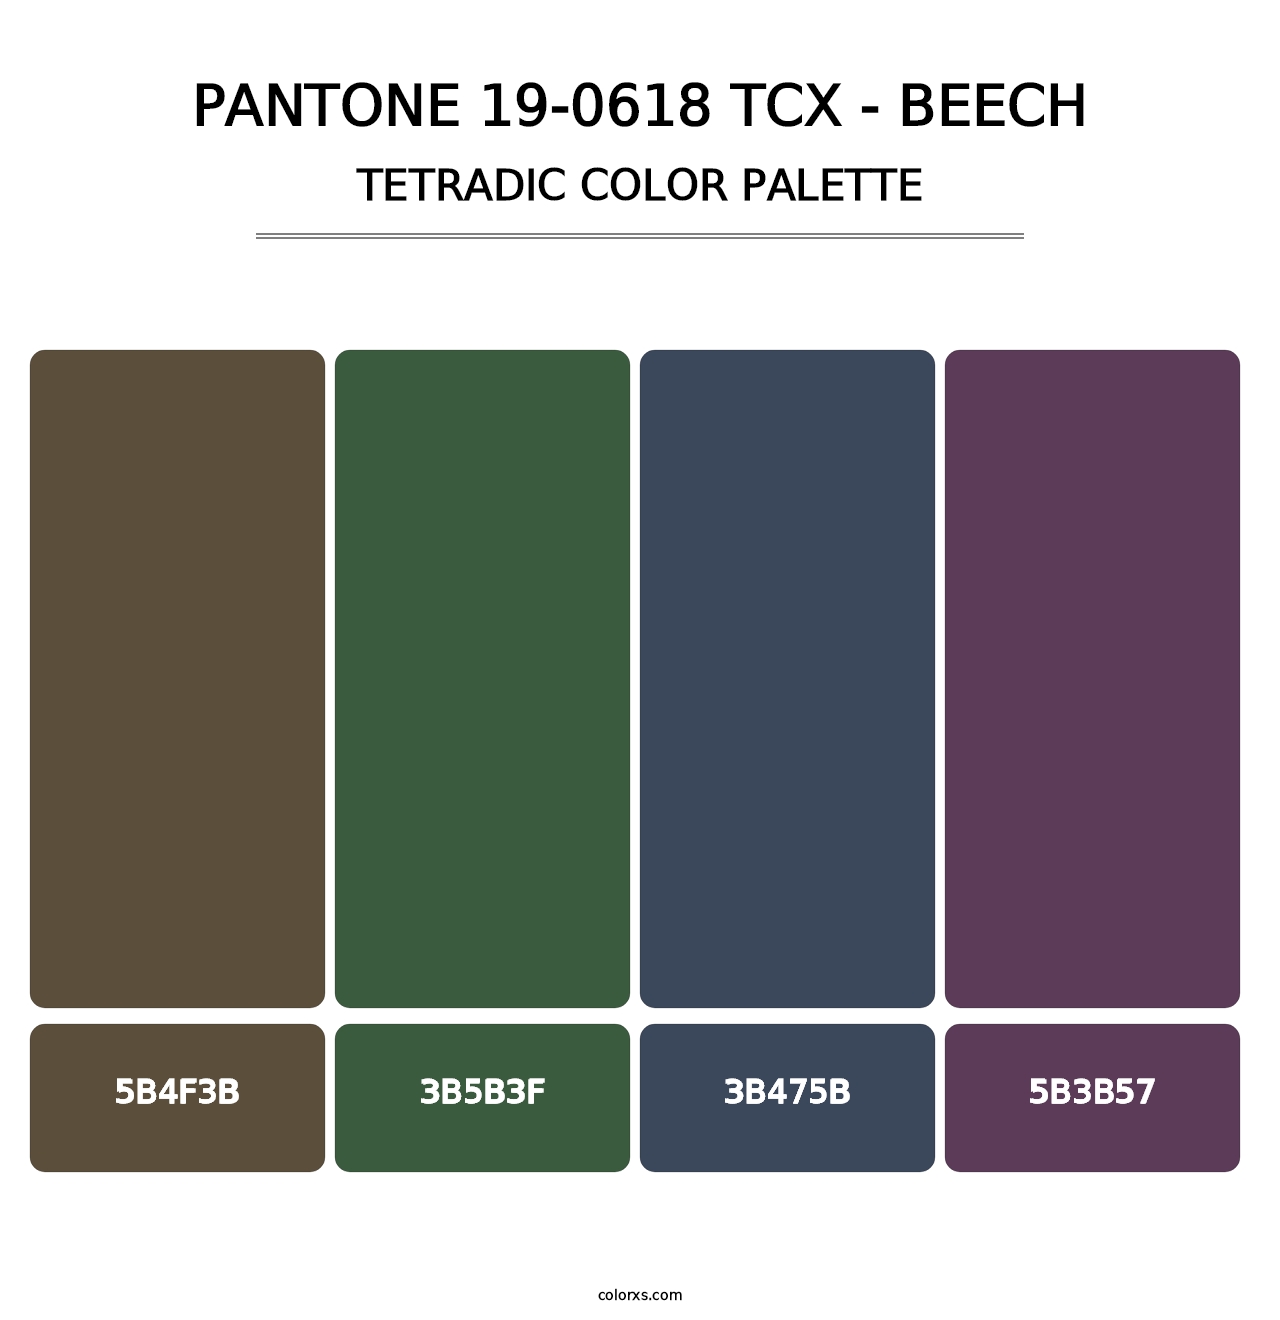 PANTONE 19-0618 TCX - Beech - Tetradic Color Palette